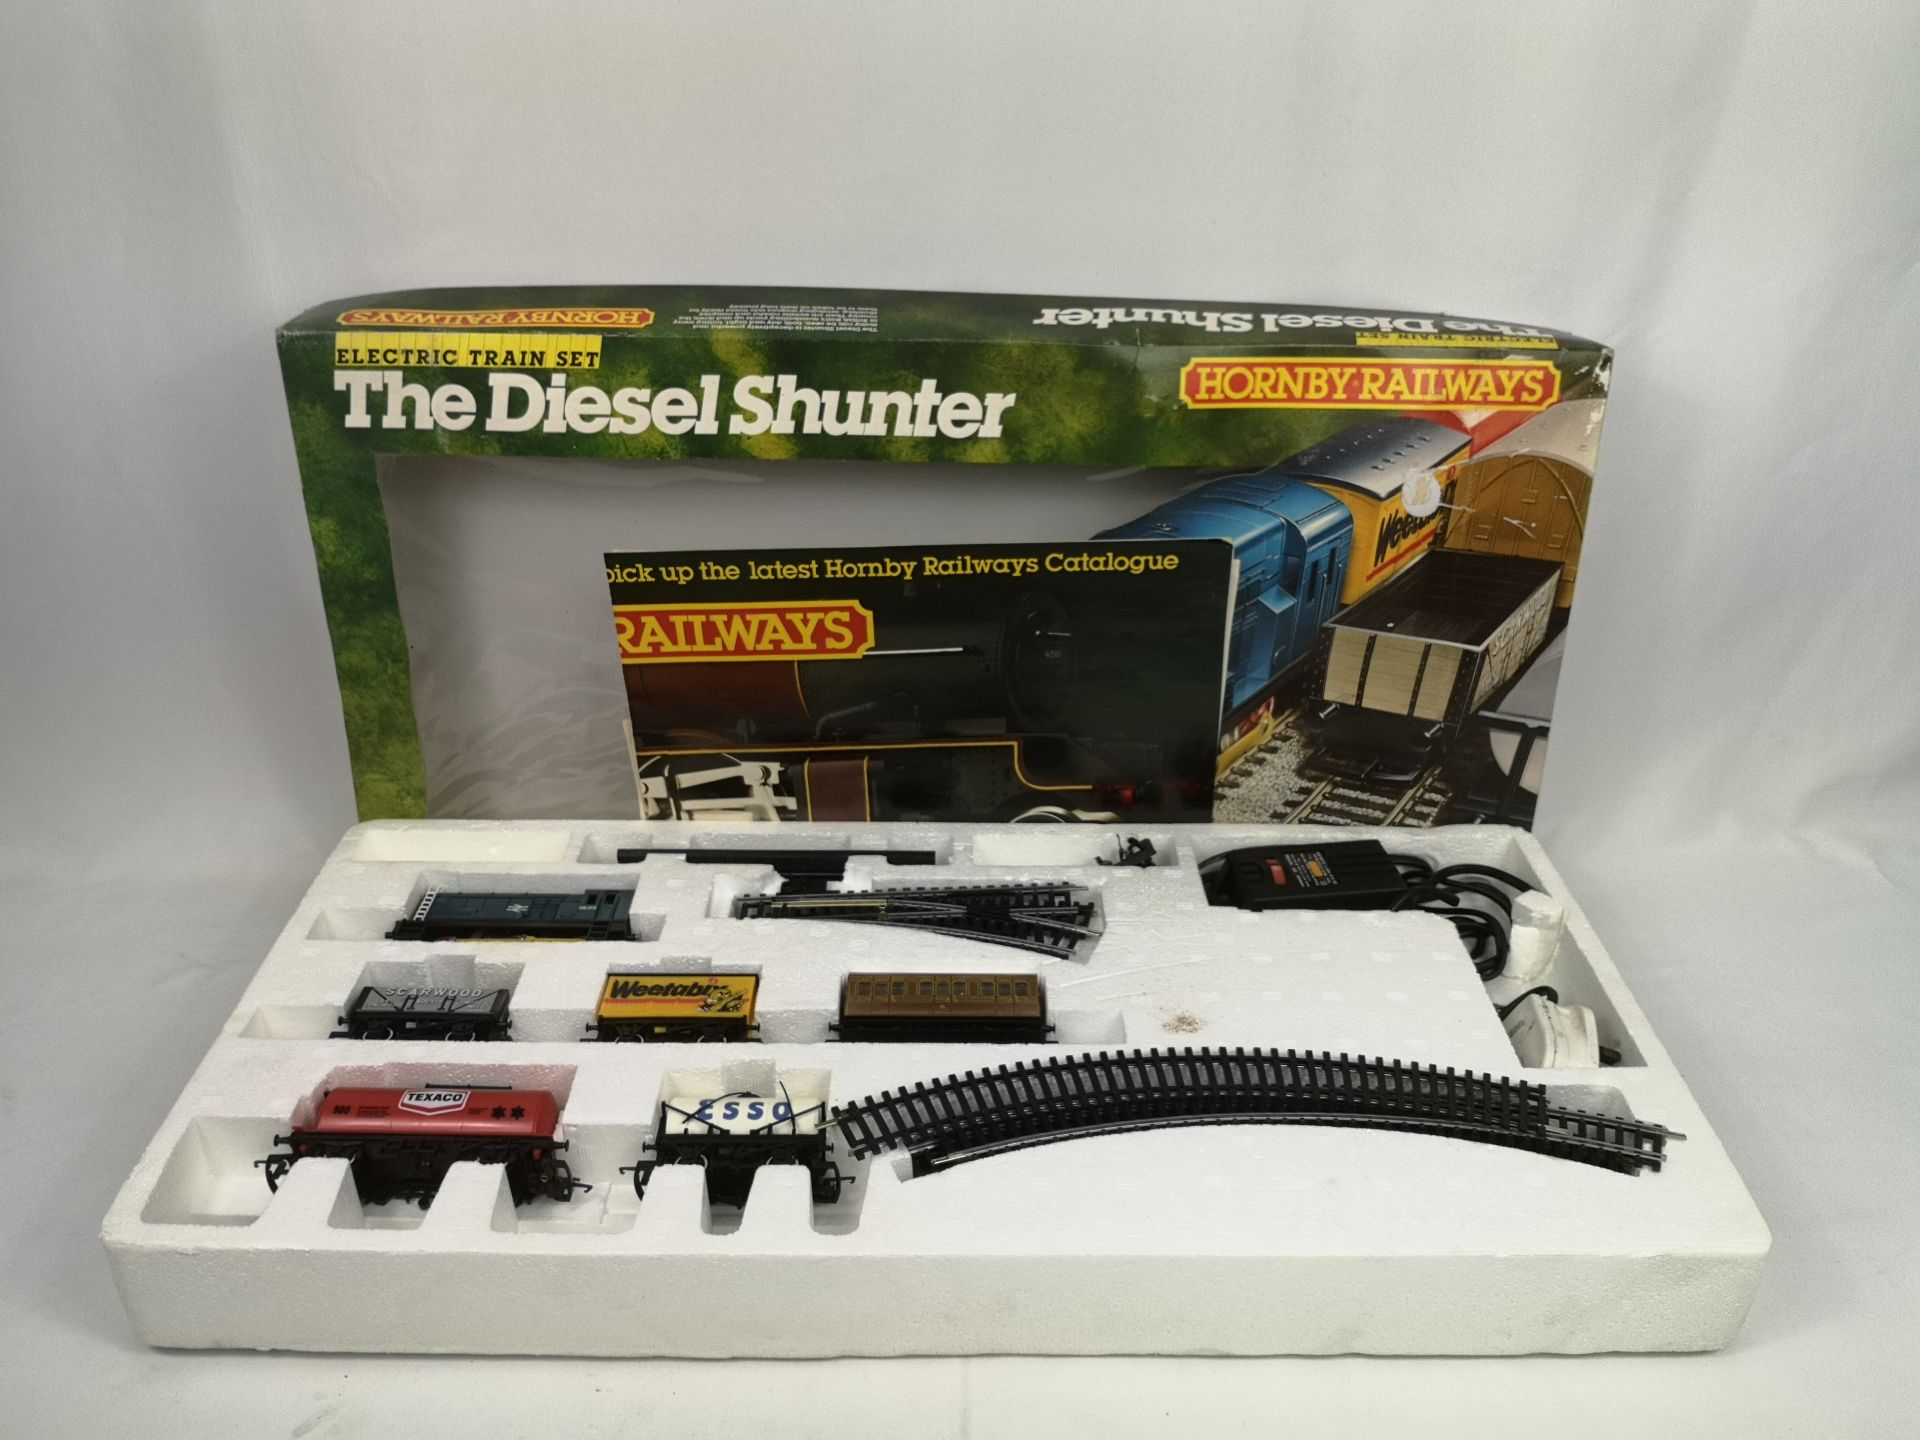 Hornby Railways 00 gauge train set - The Diesel Shunter